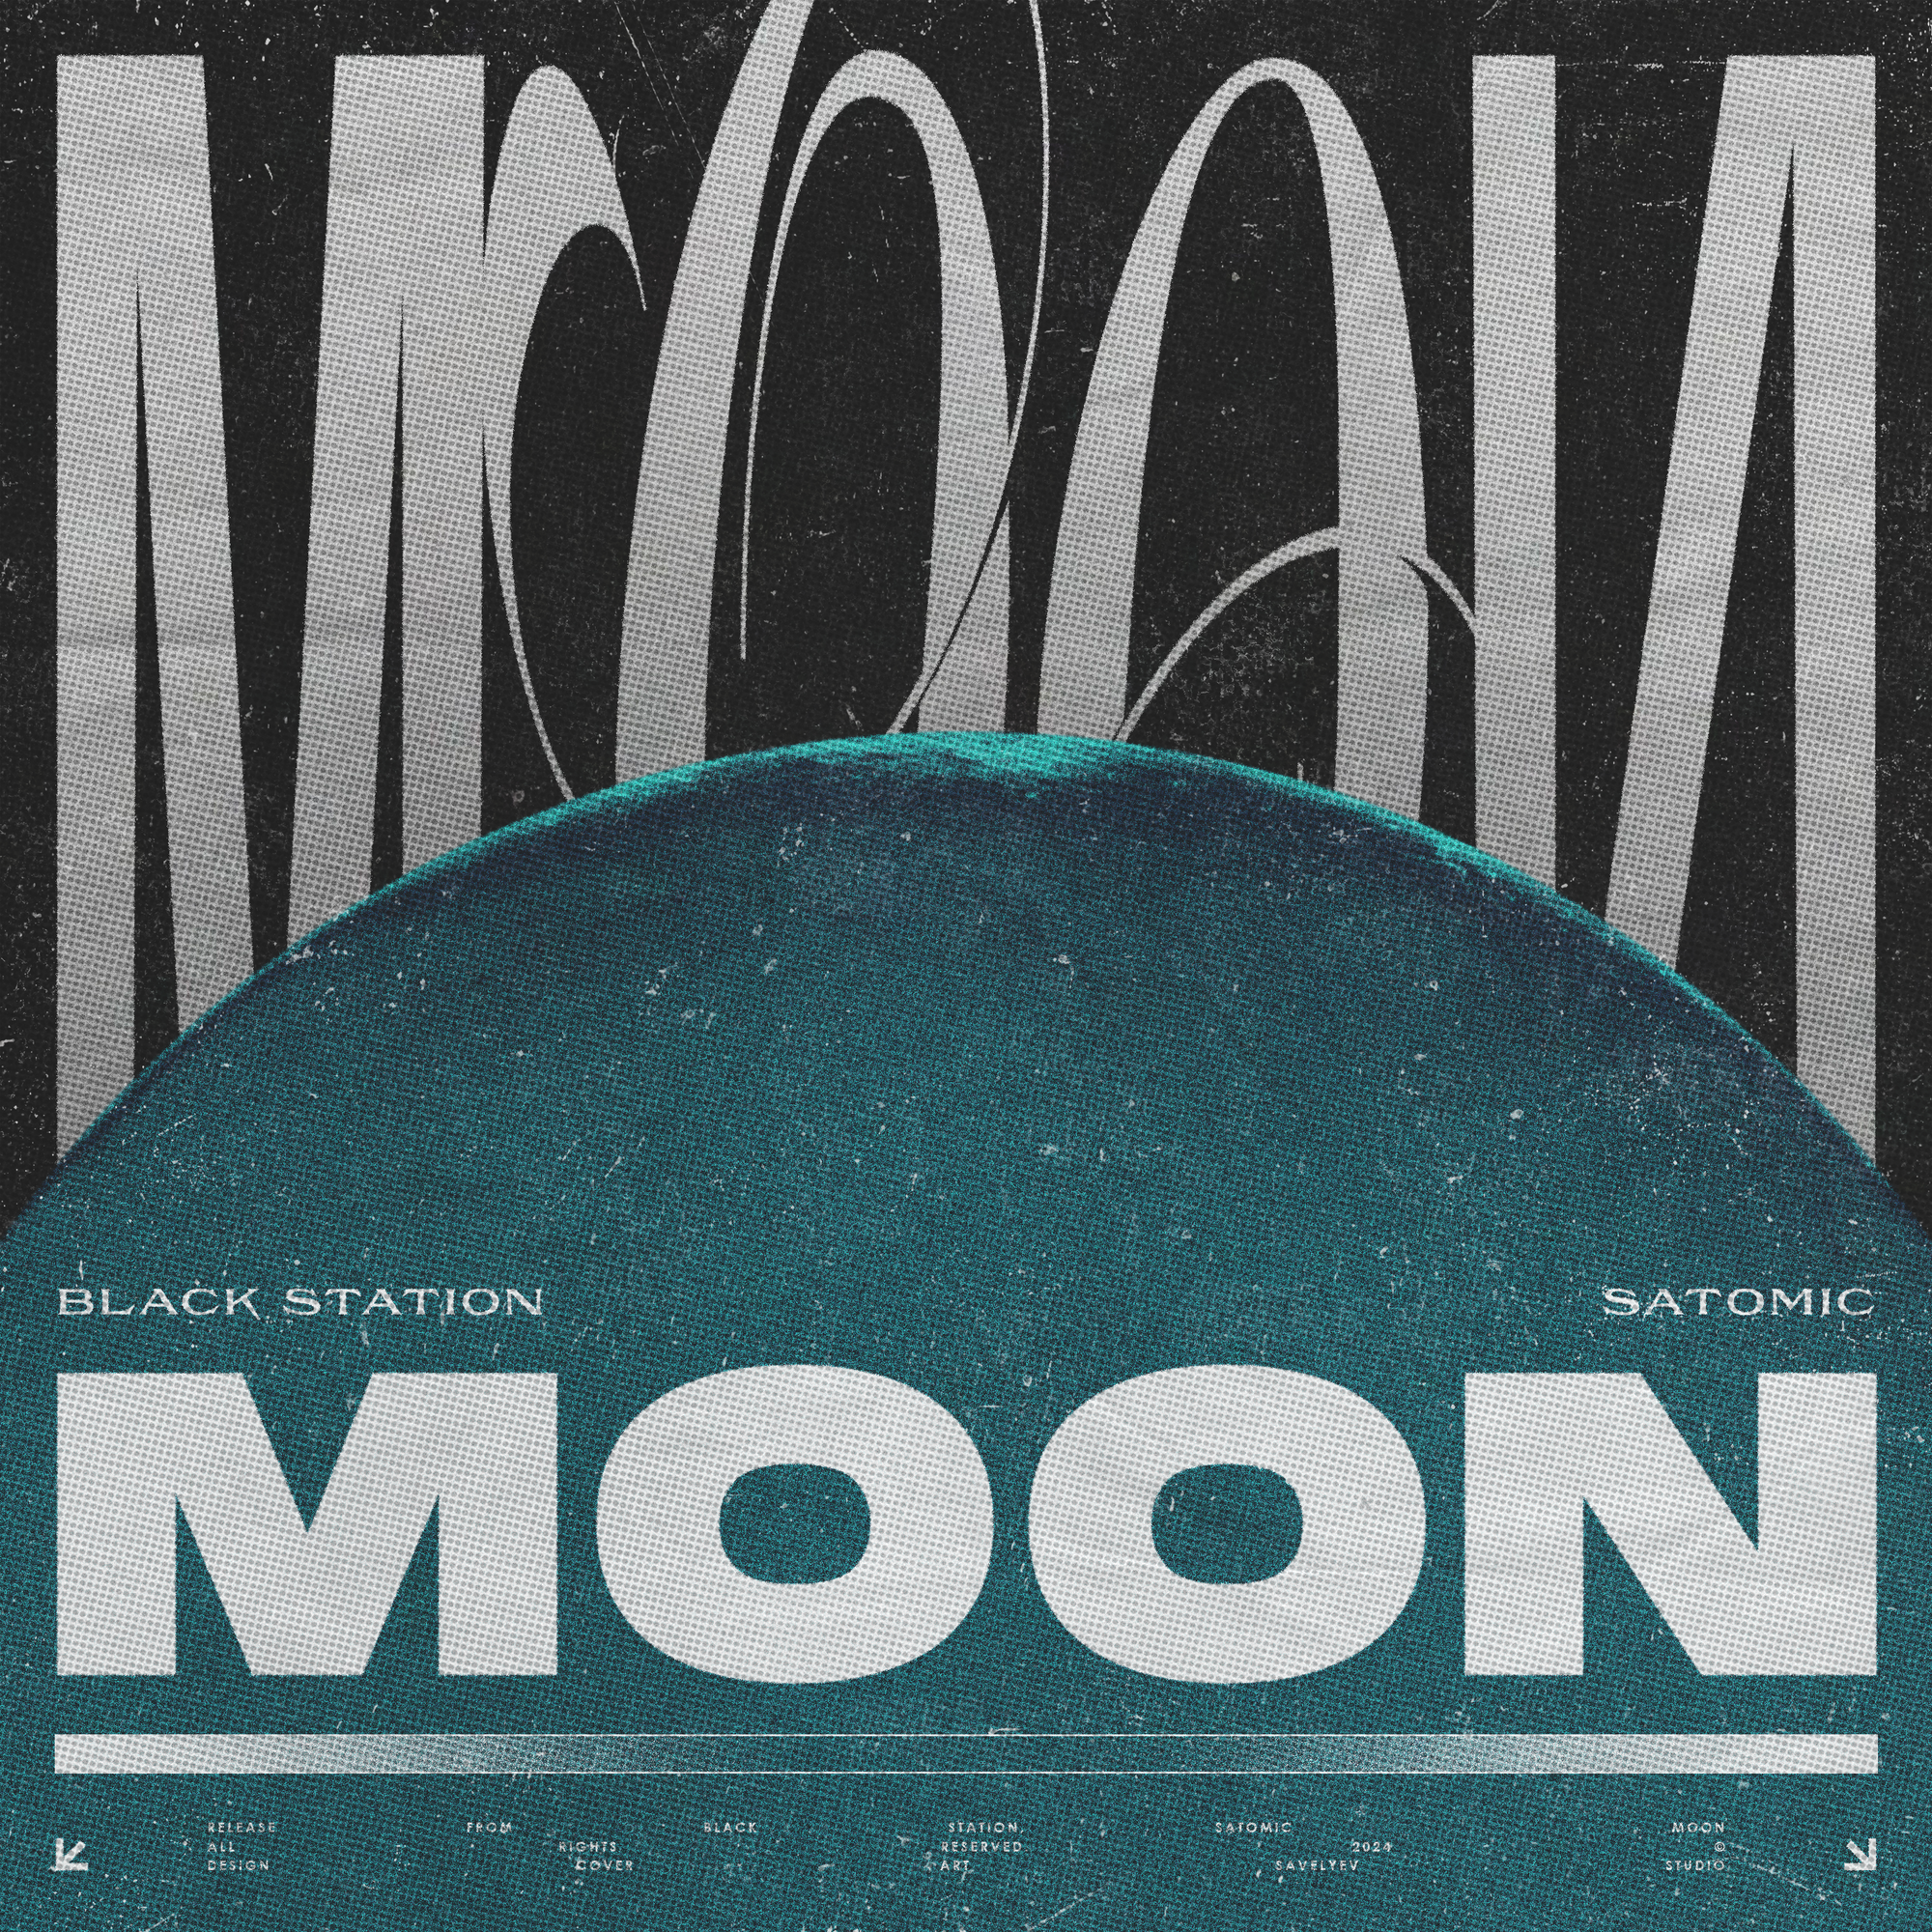 Black station satomic moon